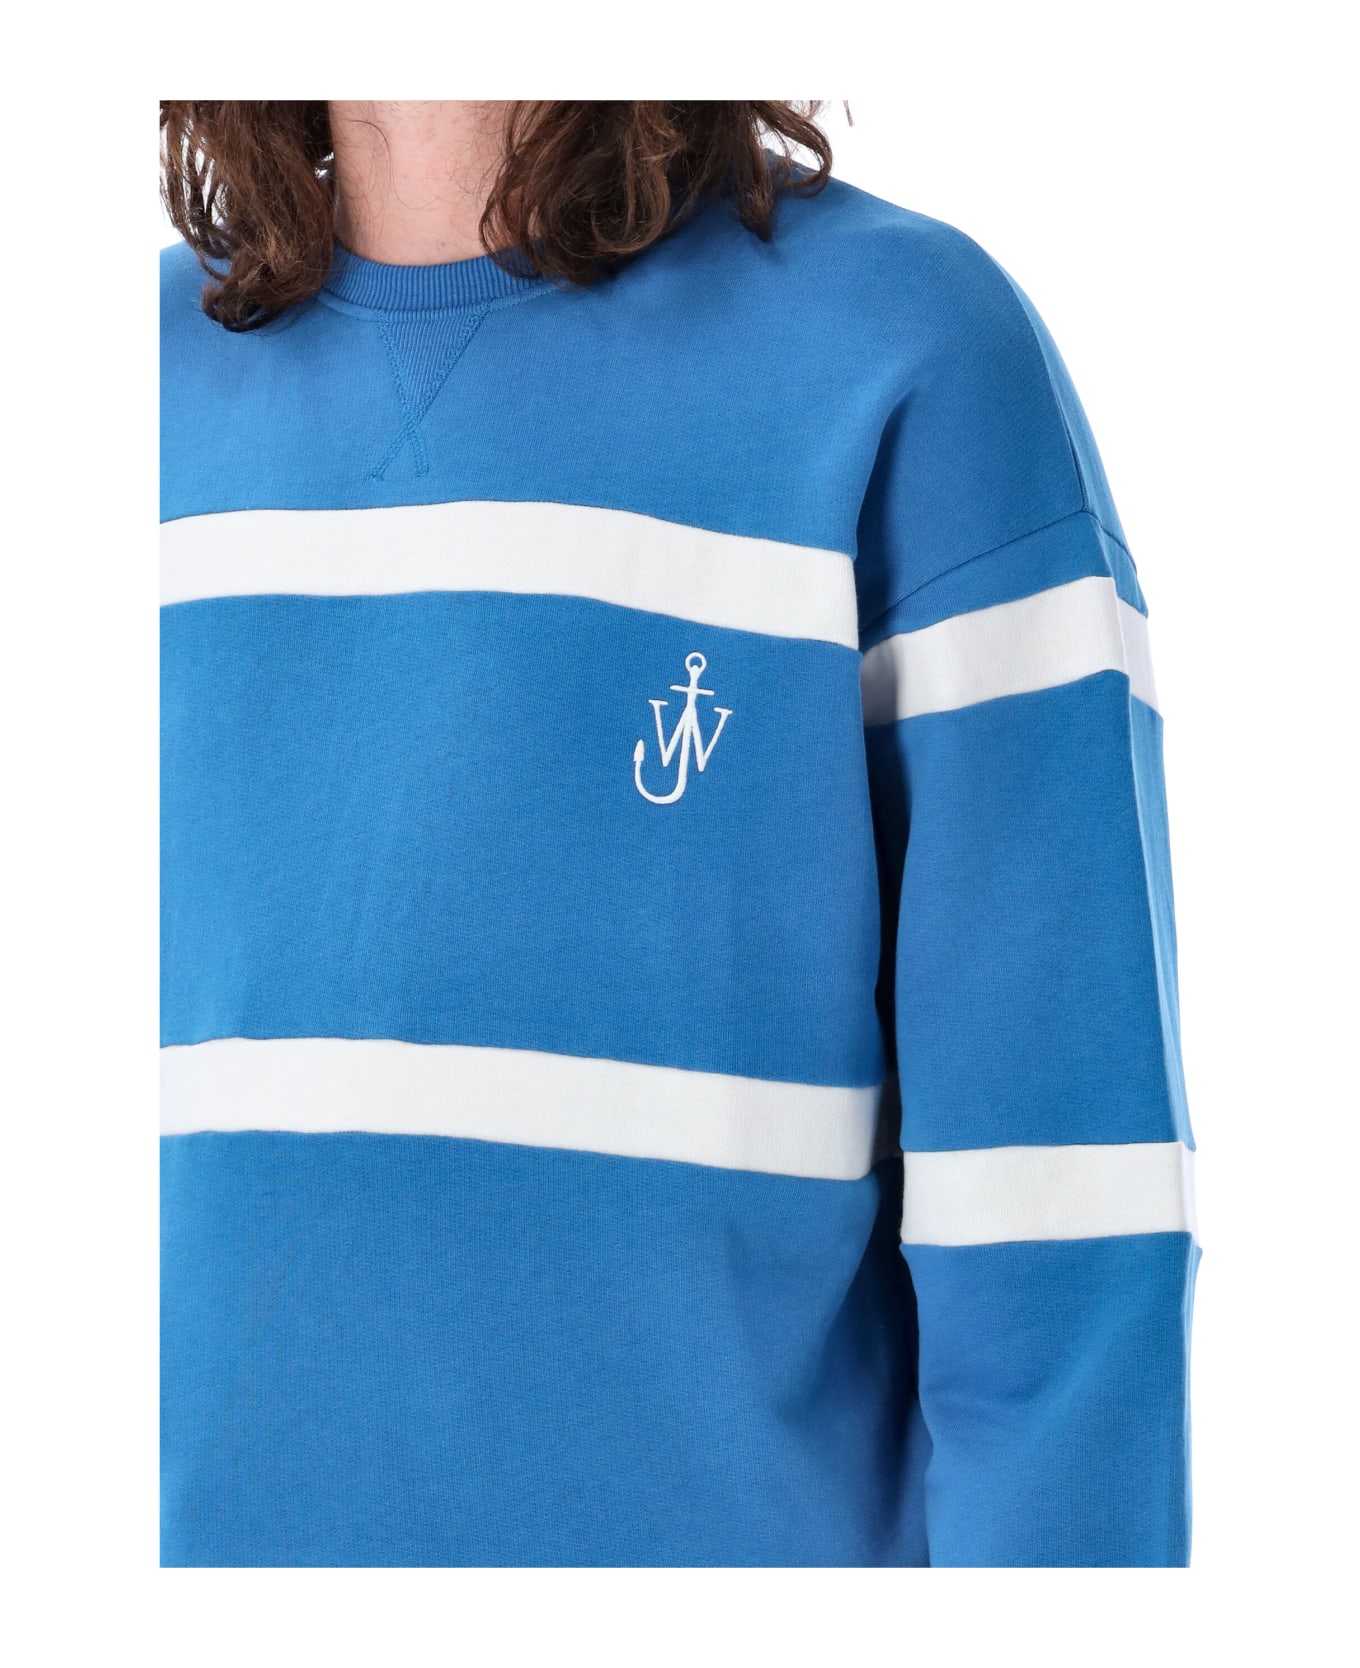 J.W. Anderson Striped Sweatshirt - BLUE WHITE